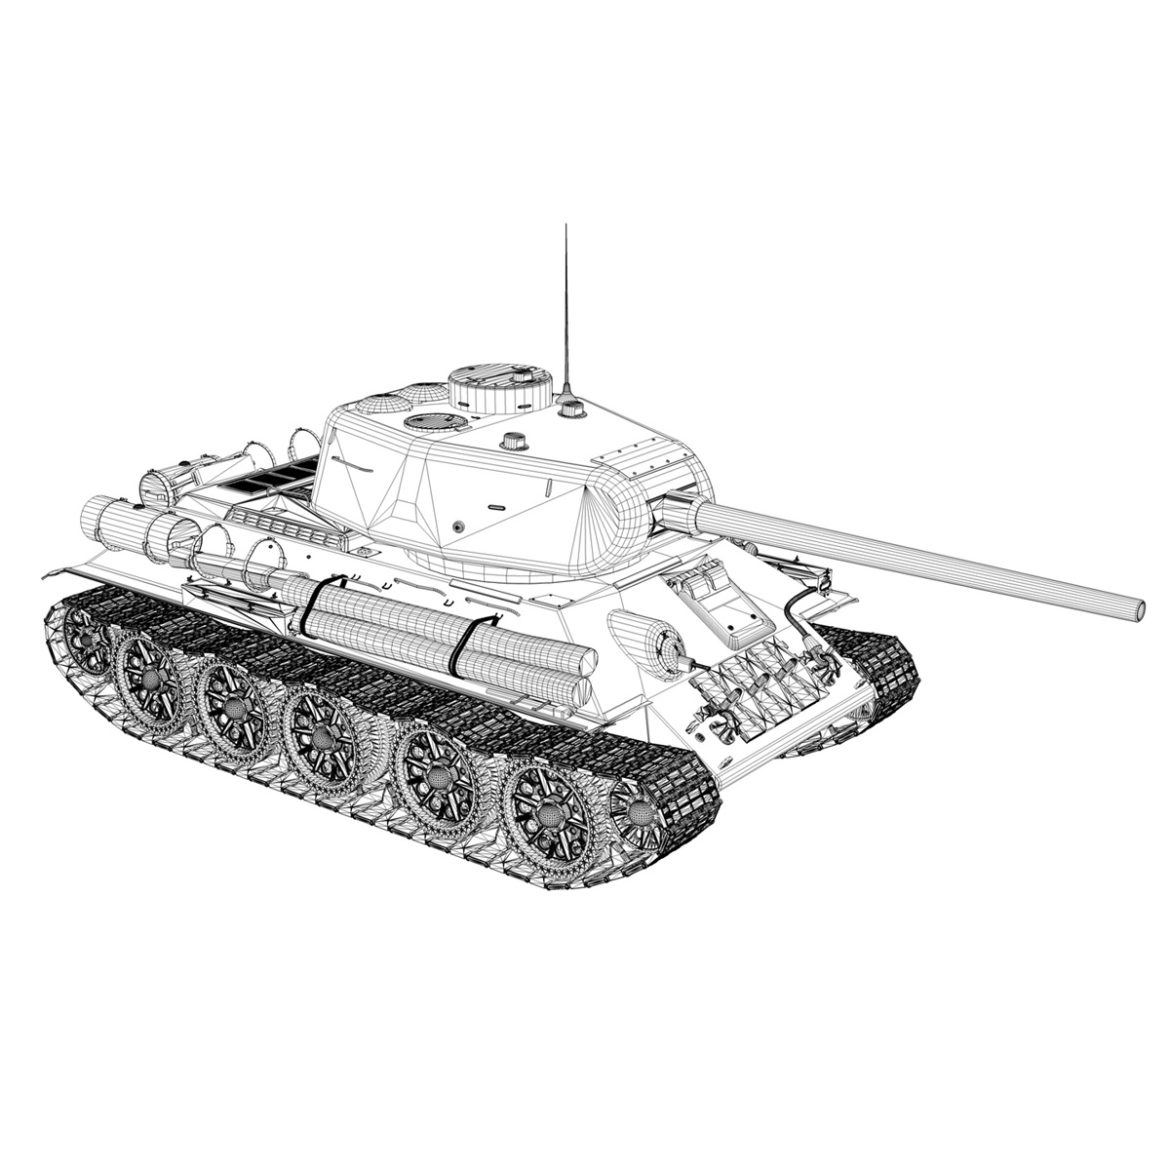 t-34 85 – soviet medium tank – 170 3d model 3ds fbx c4d lwo obj 294185